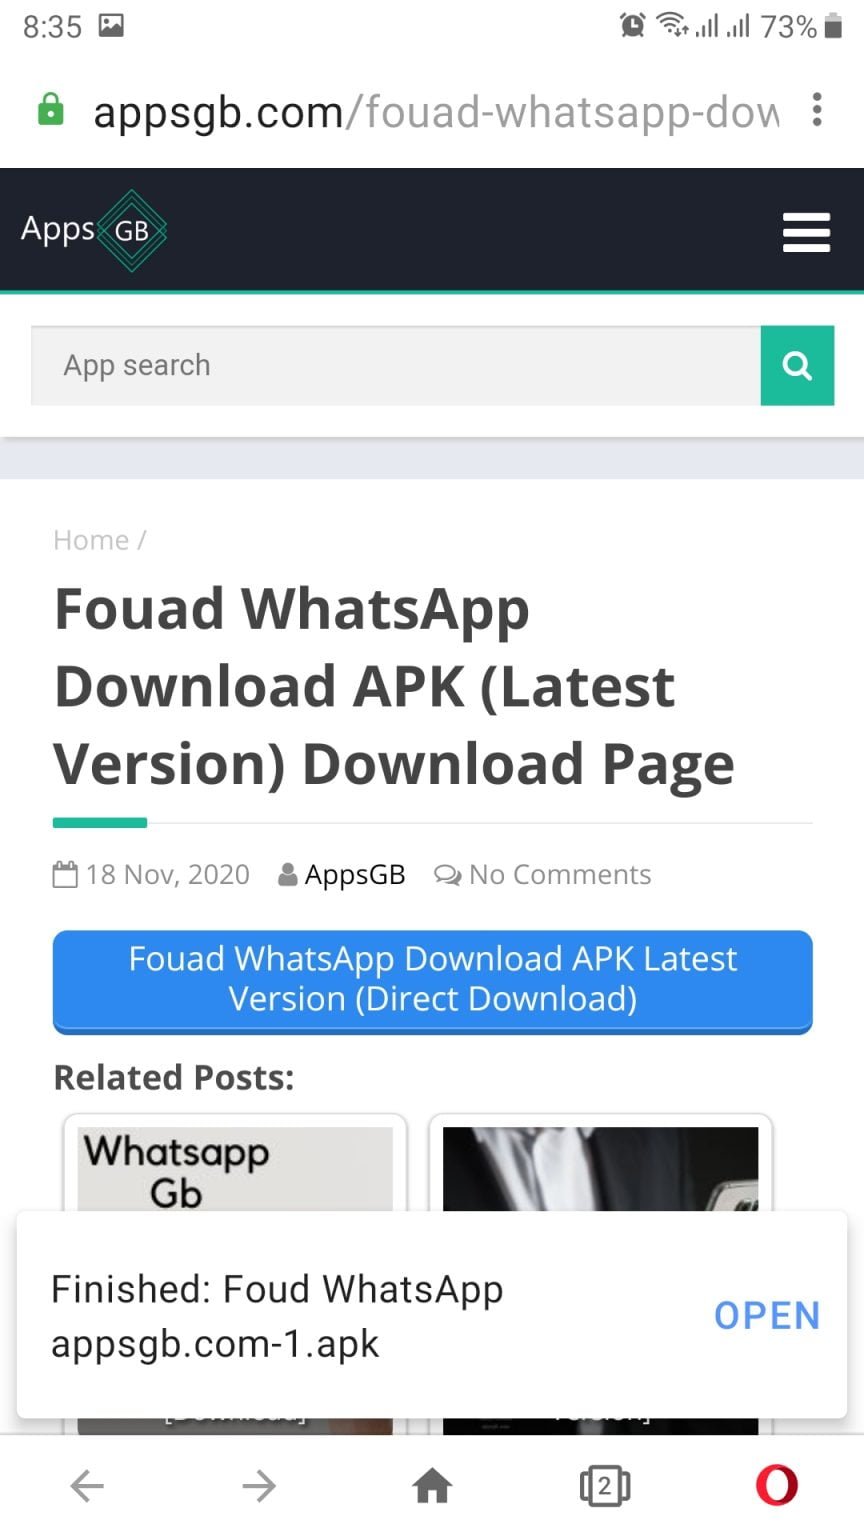 fouad whatsapp download 2021